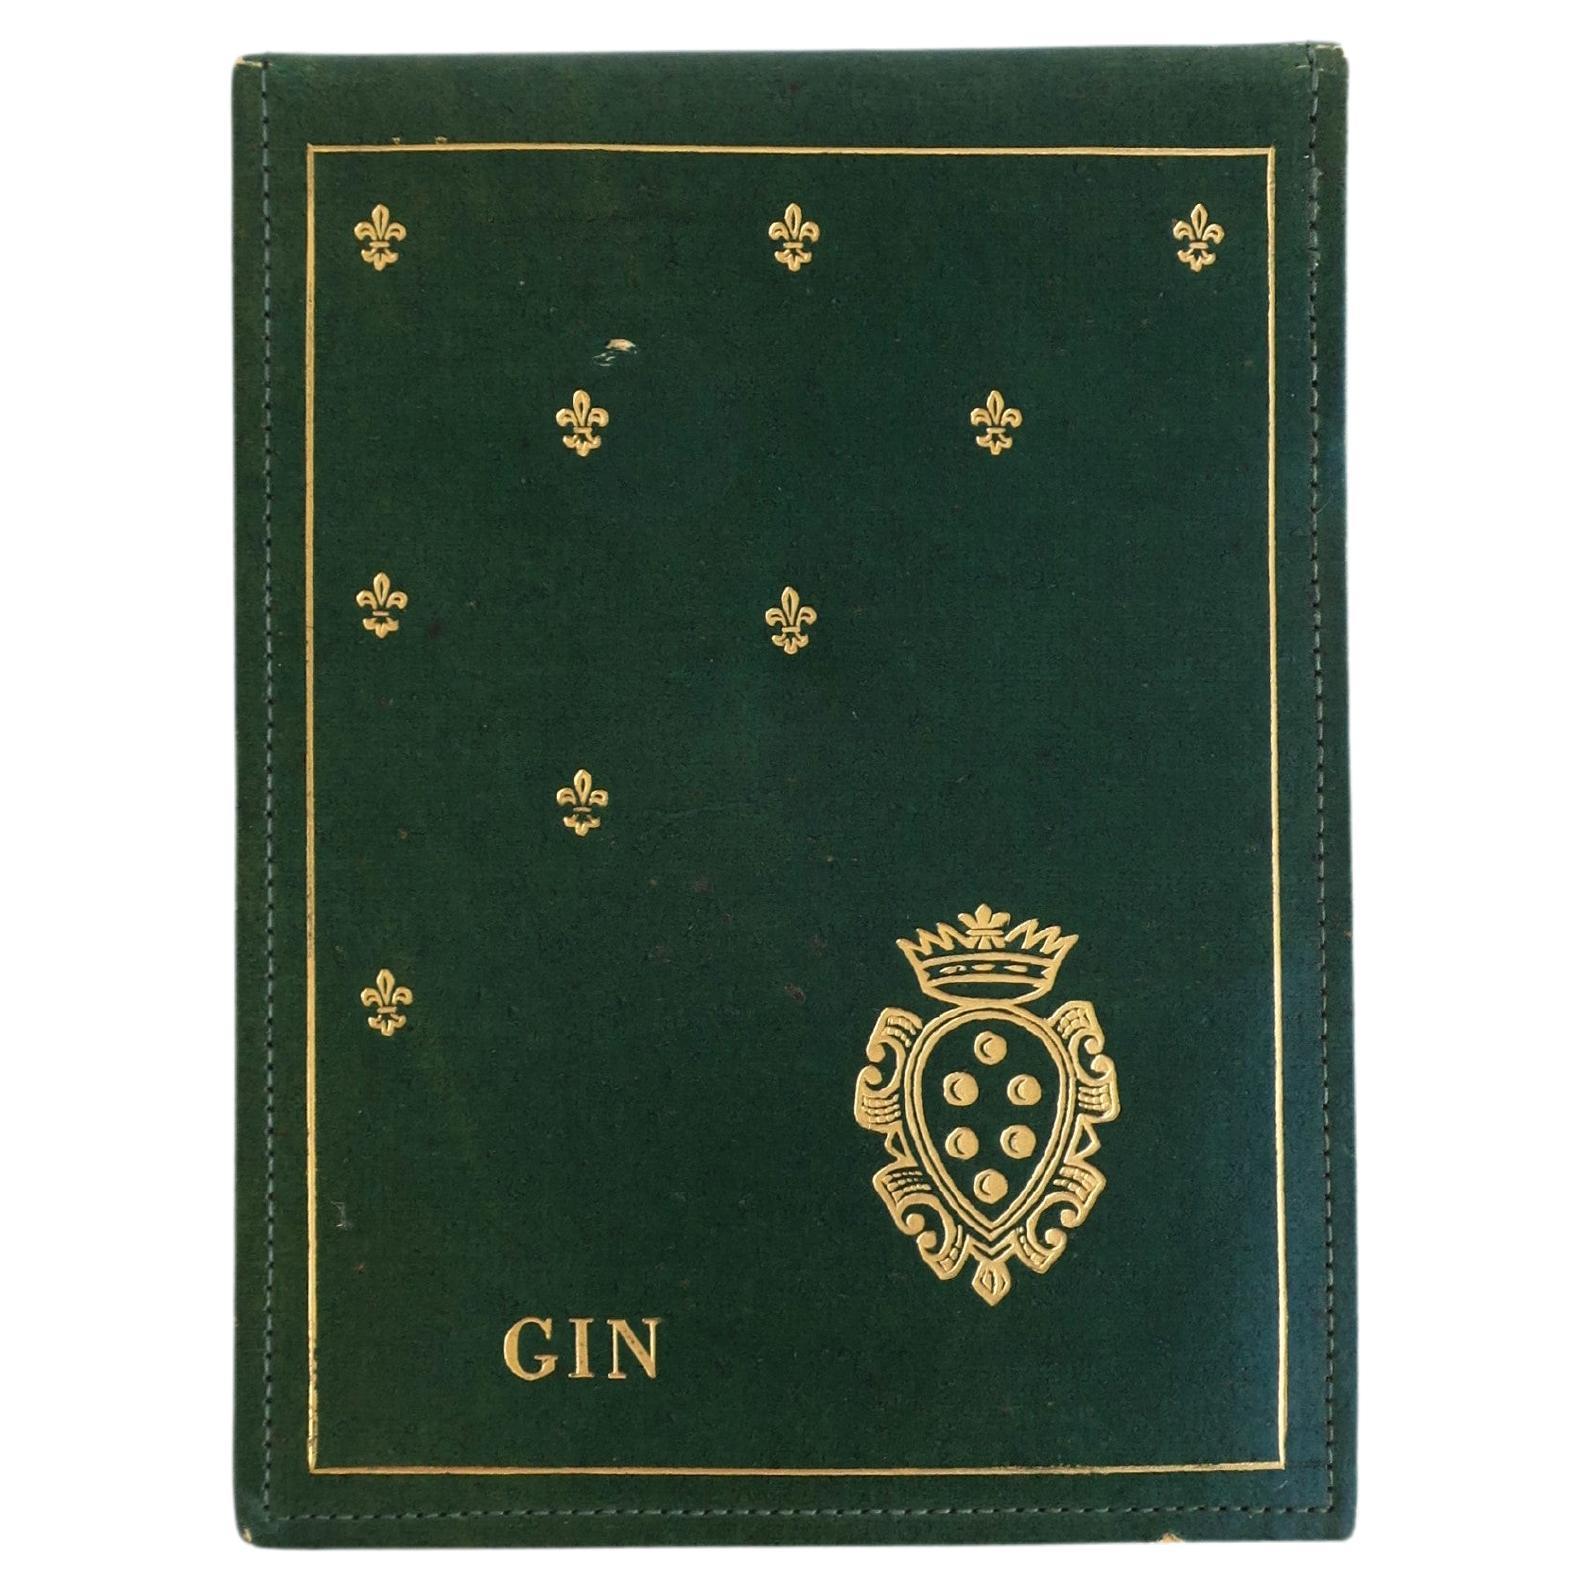 Pad de jeu de cartes à Gin fabriqué en Italie en vente